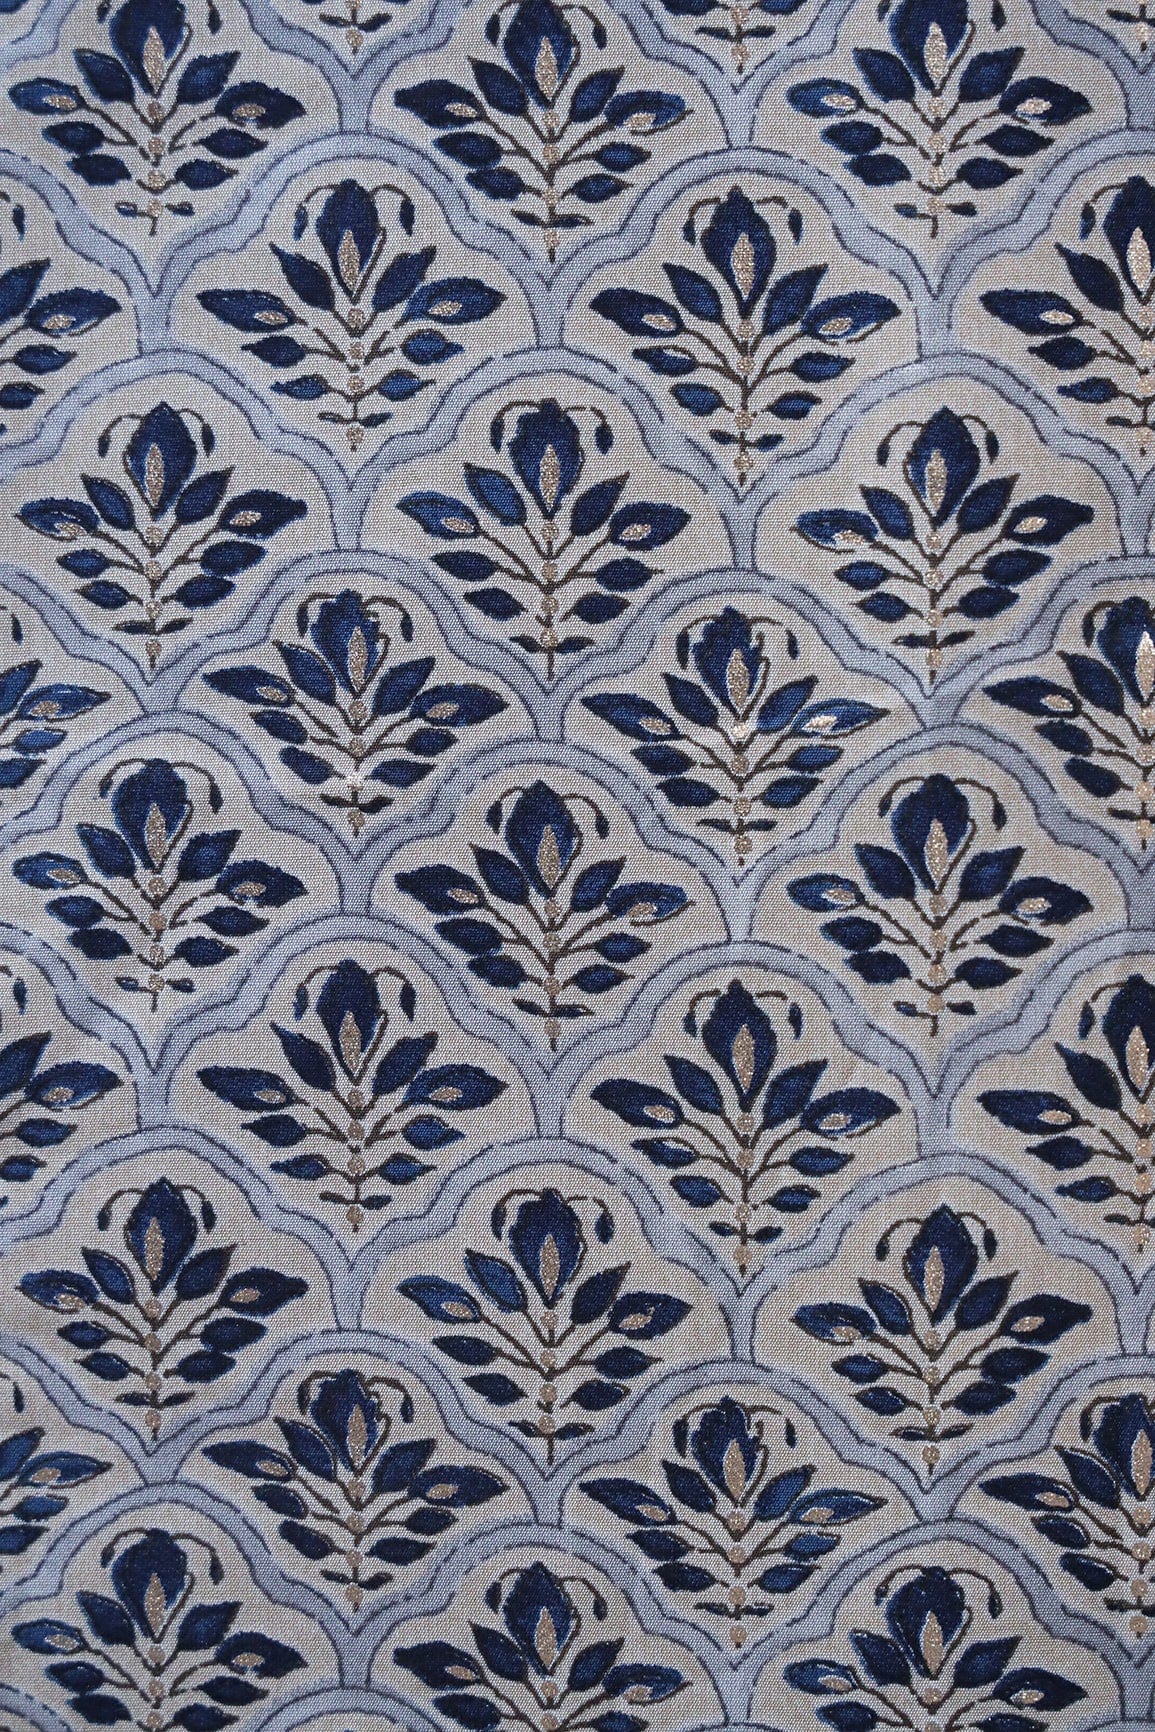 doeraa Prints 1 Meter Cut Piece Of Grey And Blue Trellis Pattern Foil Screen Print On Chanderi Silk Fabric